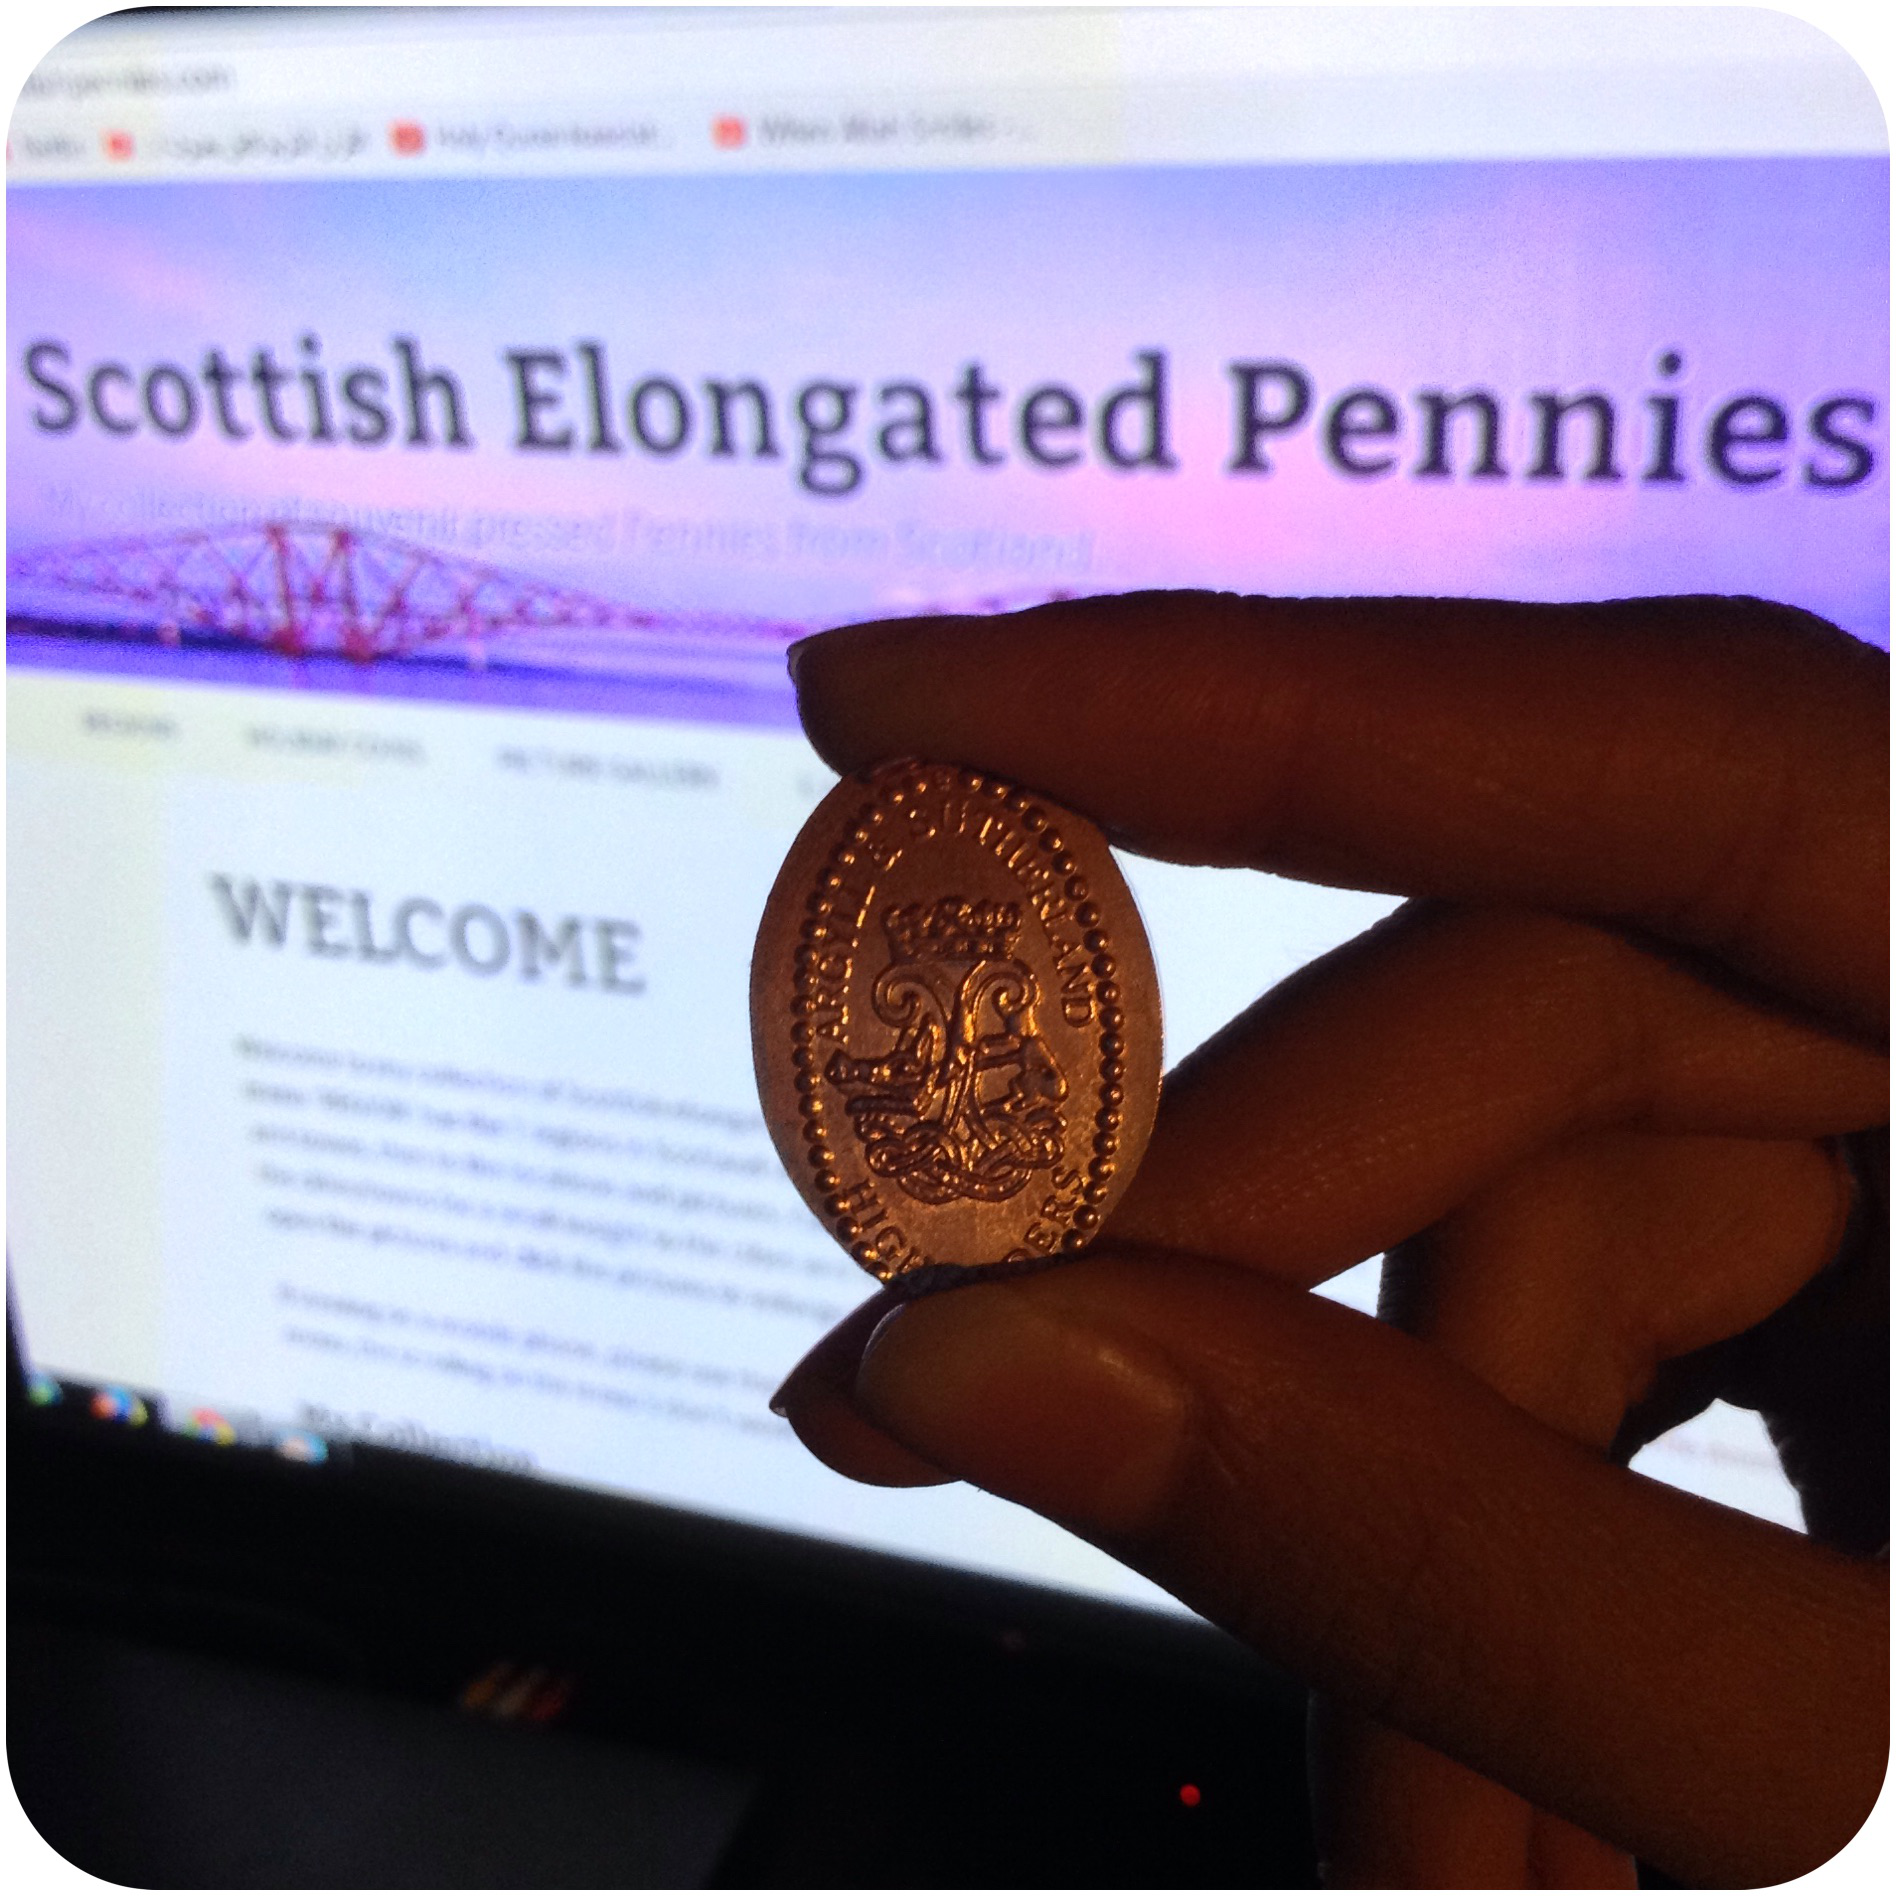 Scottish Elongated Pennies